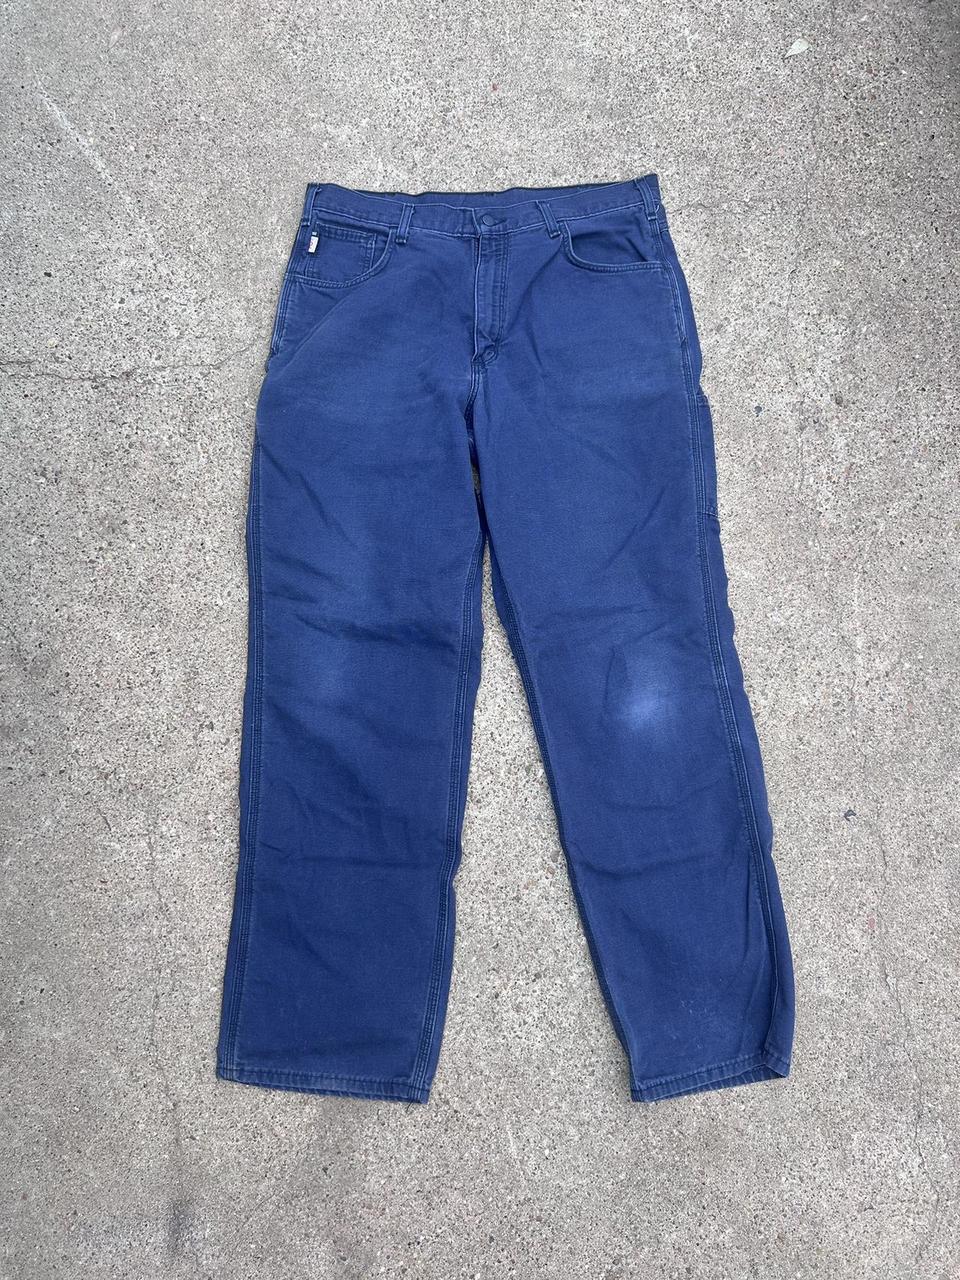 navy blue carhartt pants size 36x34. slightly faded... - Depop